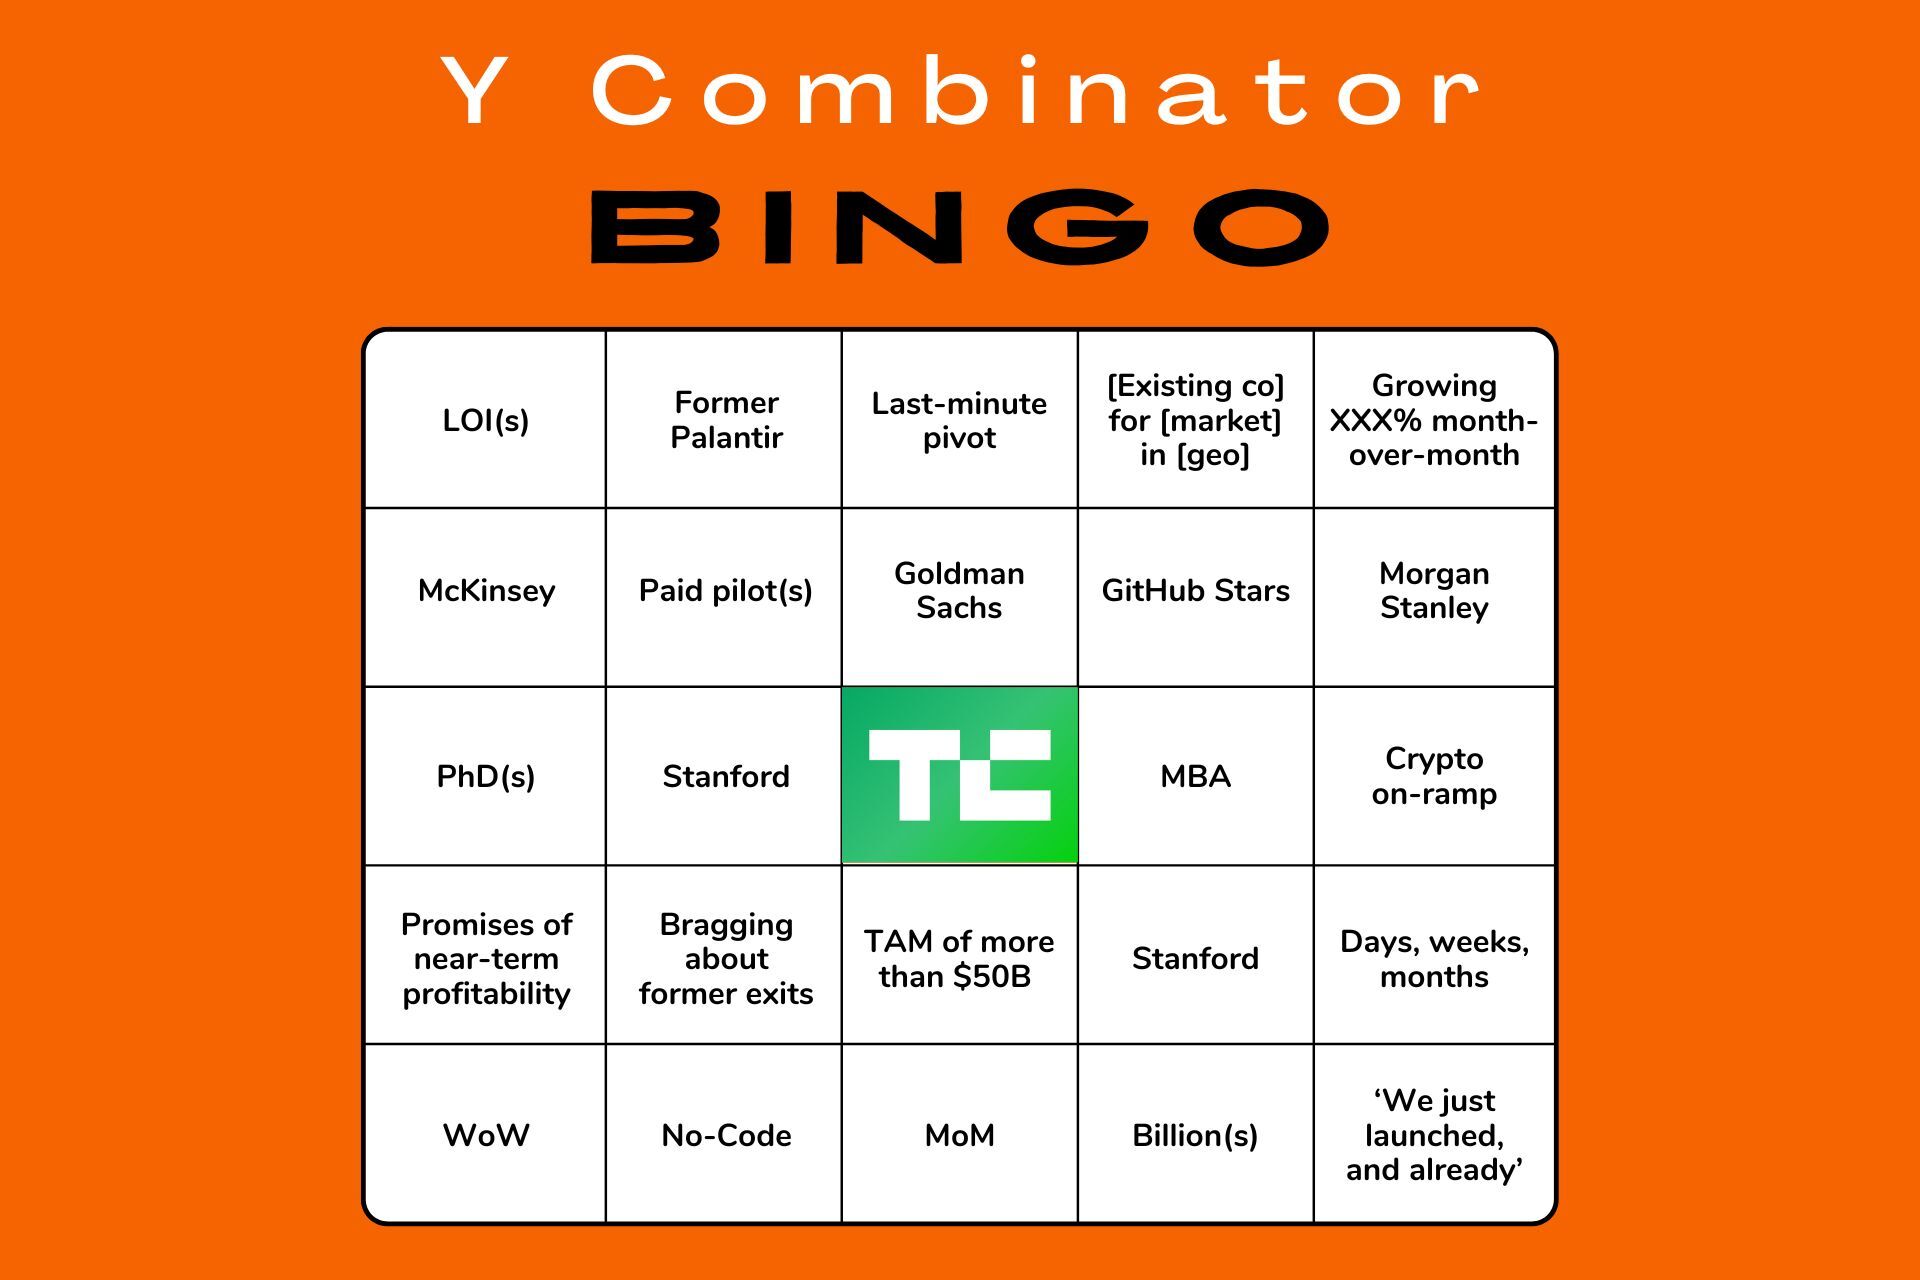 Come play YC bingo with TechCrunch